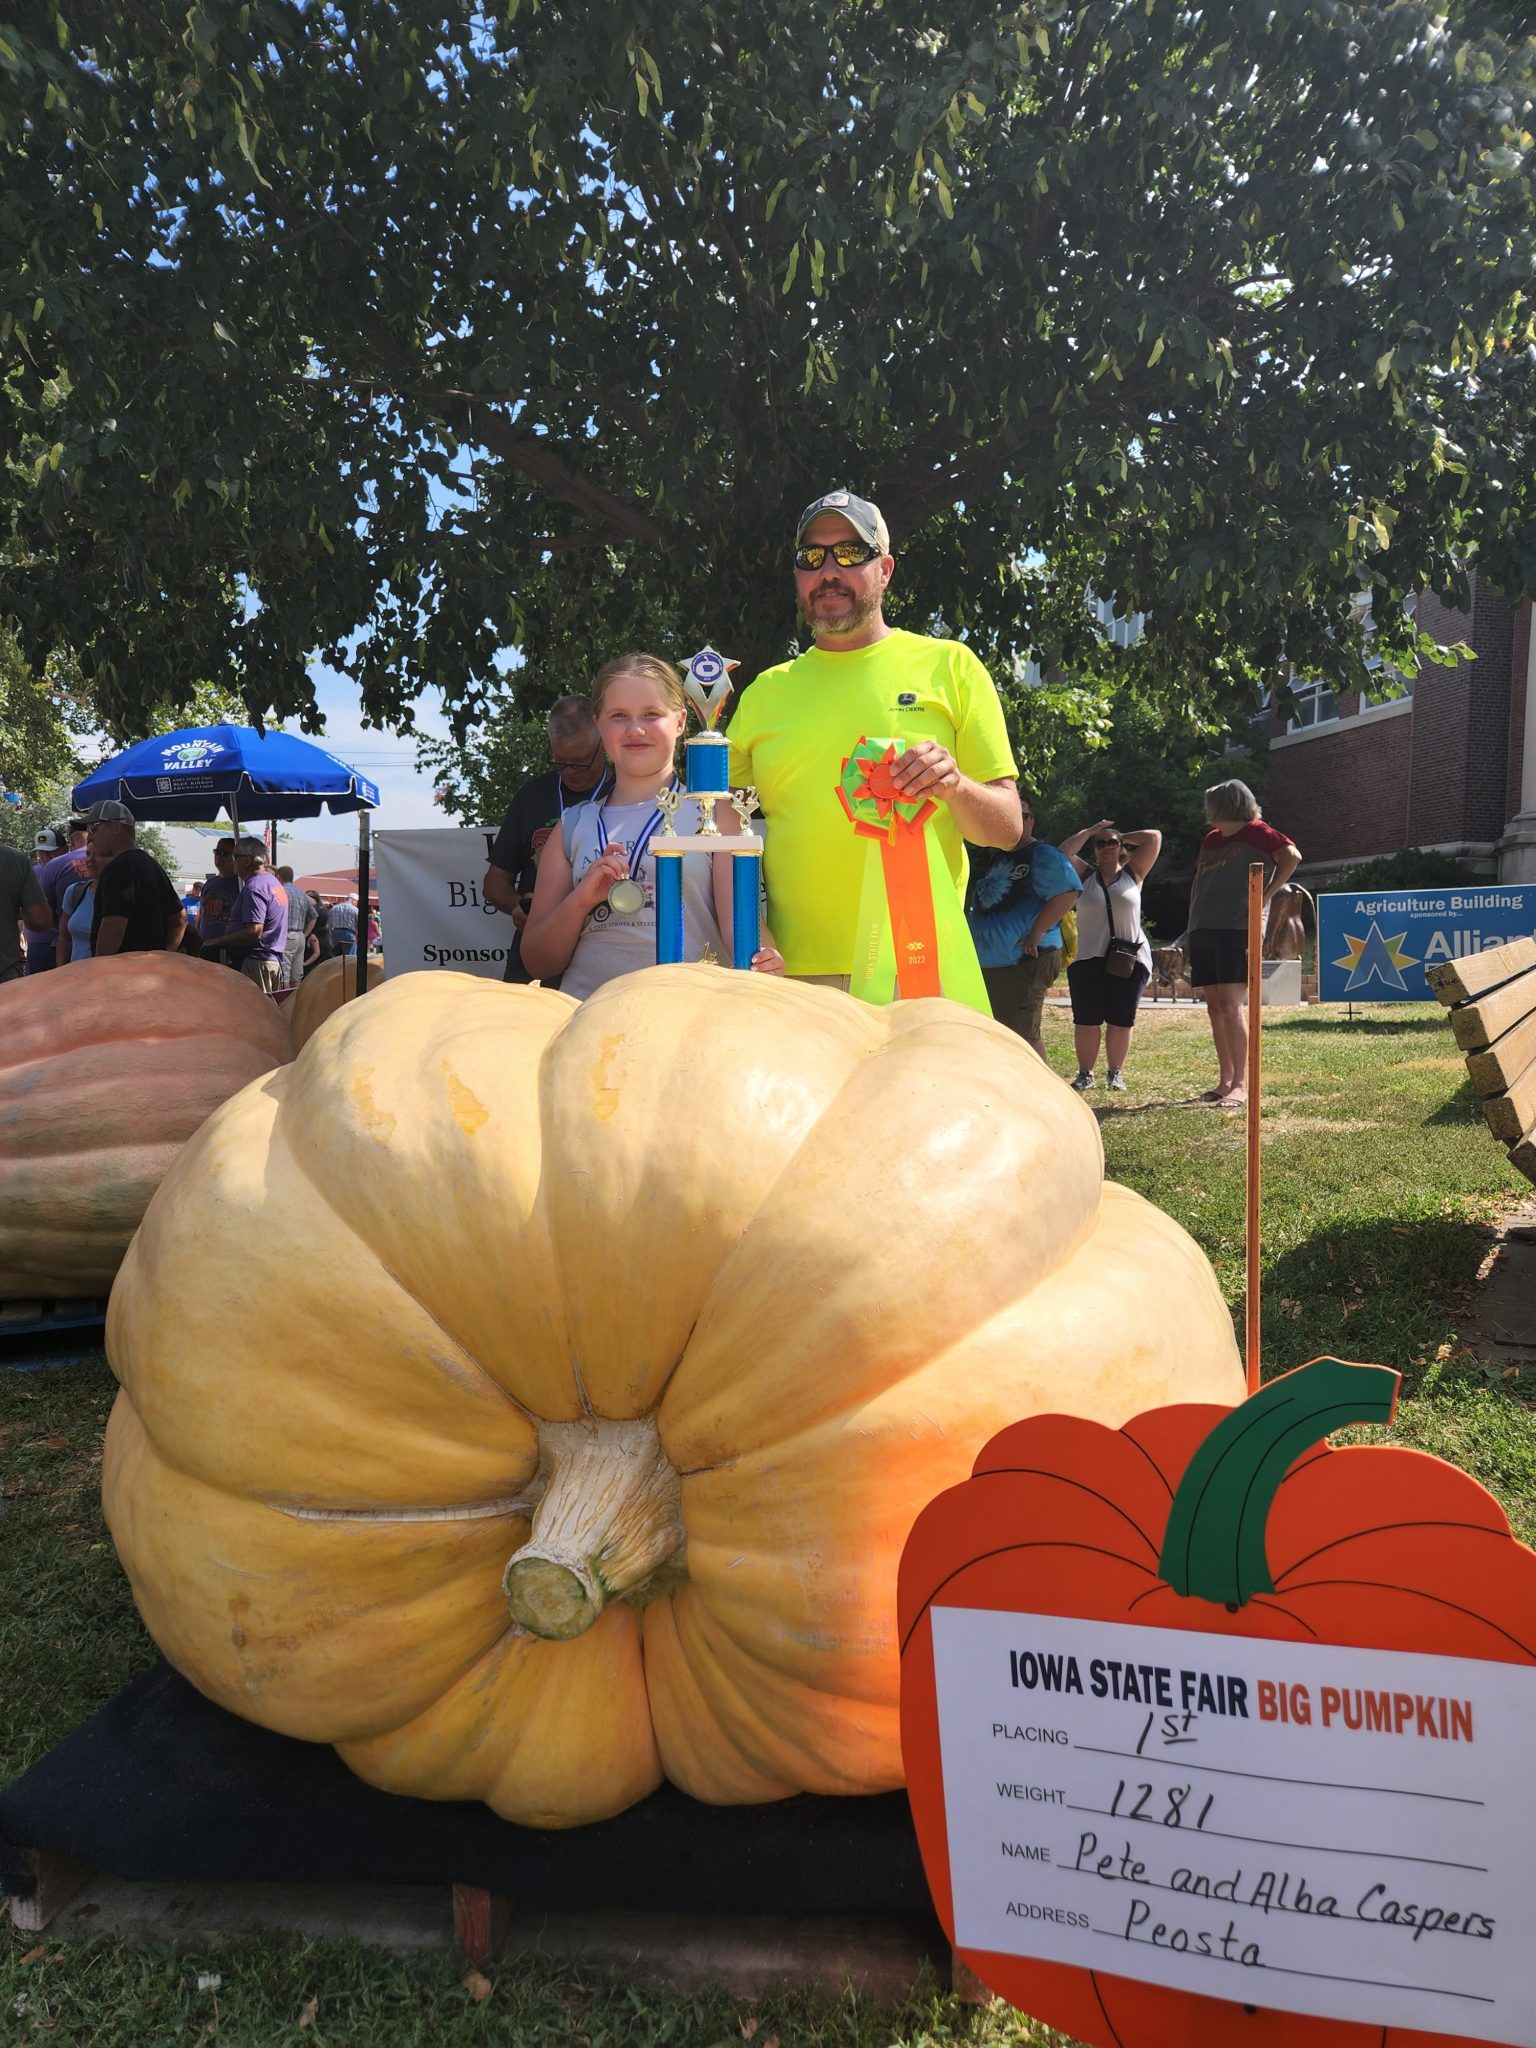 Pete and Alba Caspers Win Big at Iowa State Fair Pumpkin Contest